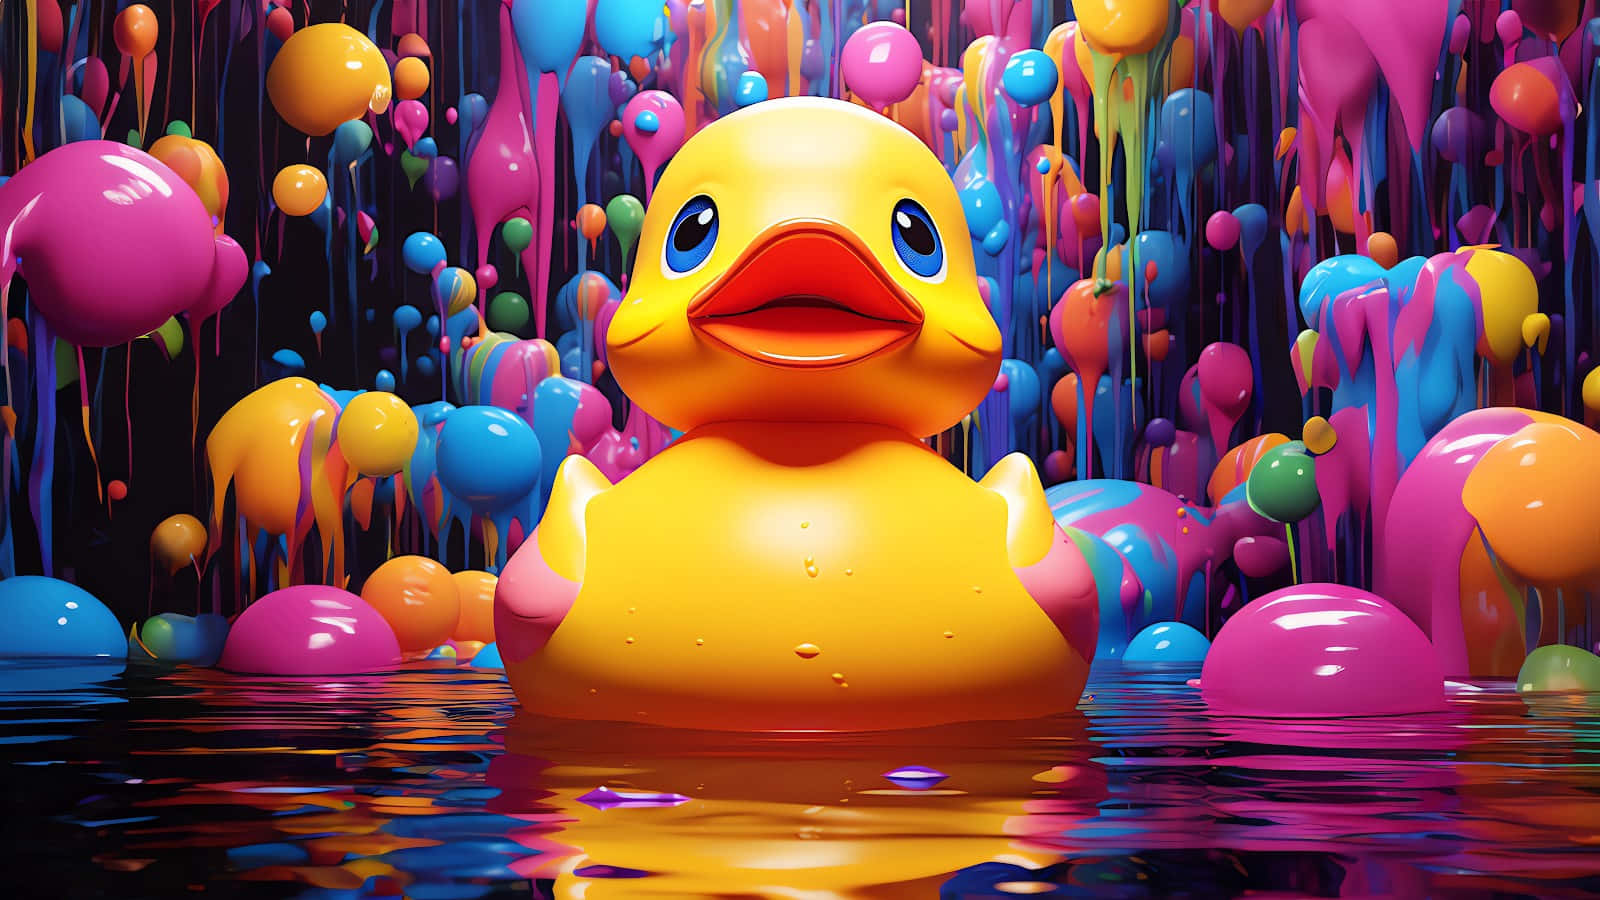 Colorful Rubber Duck Fantasy Landscape.jpg Wallpaper